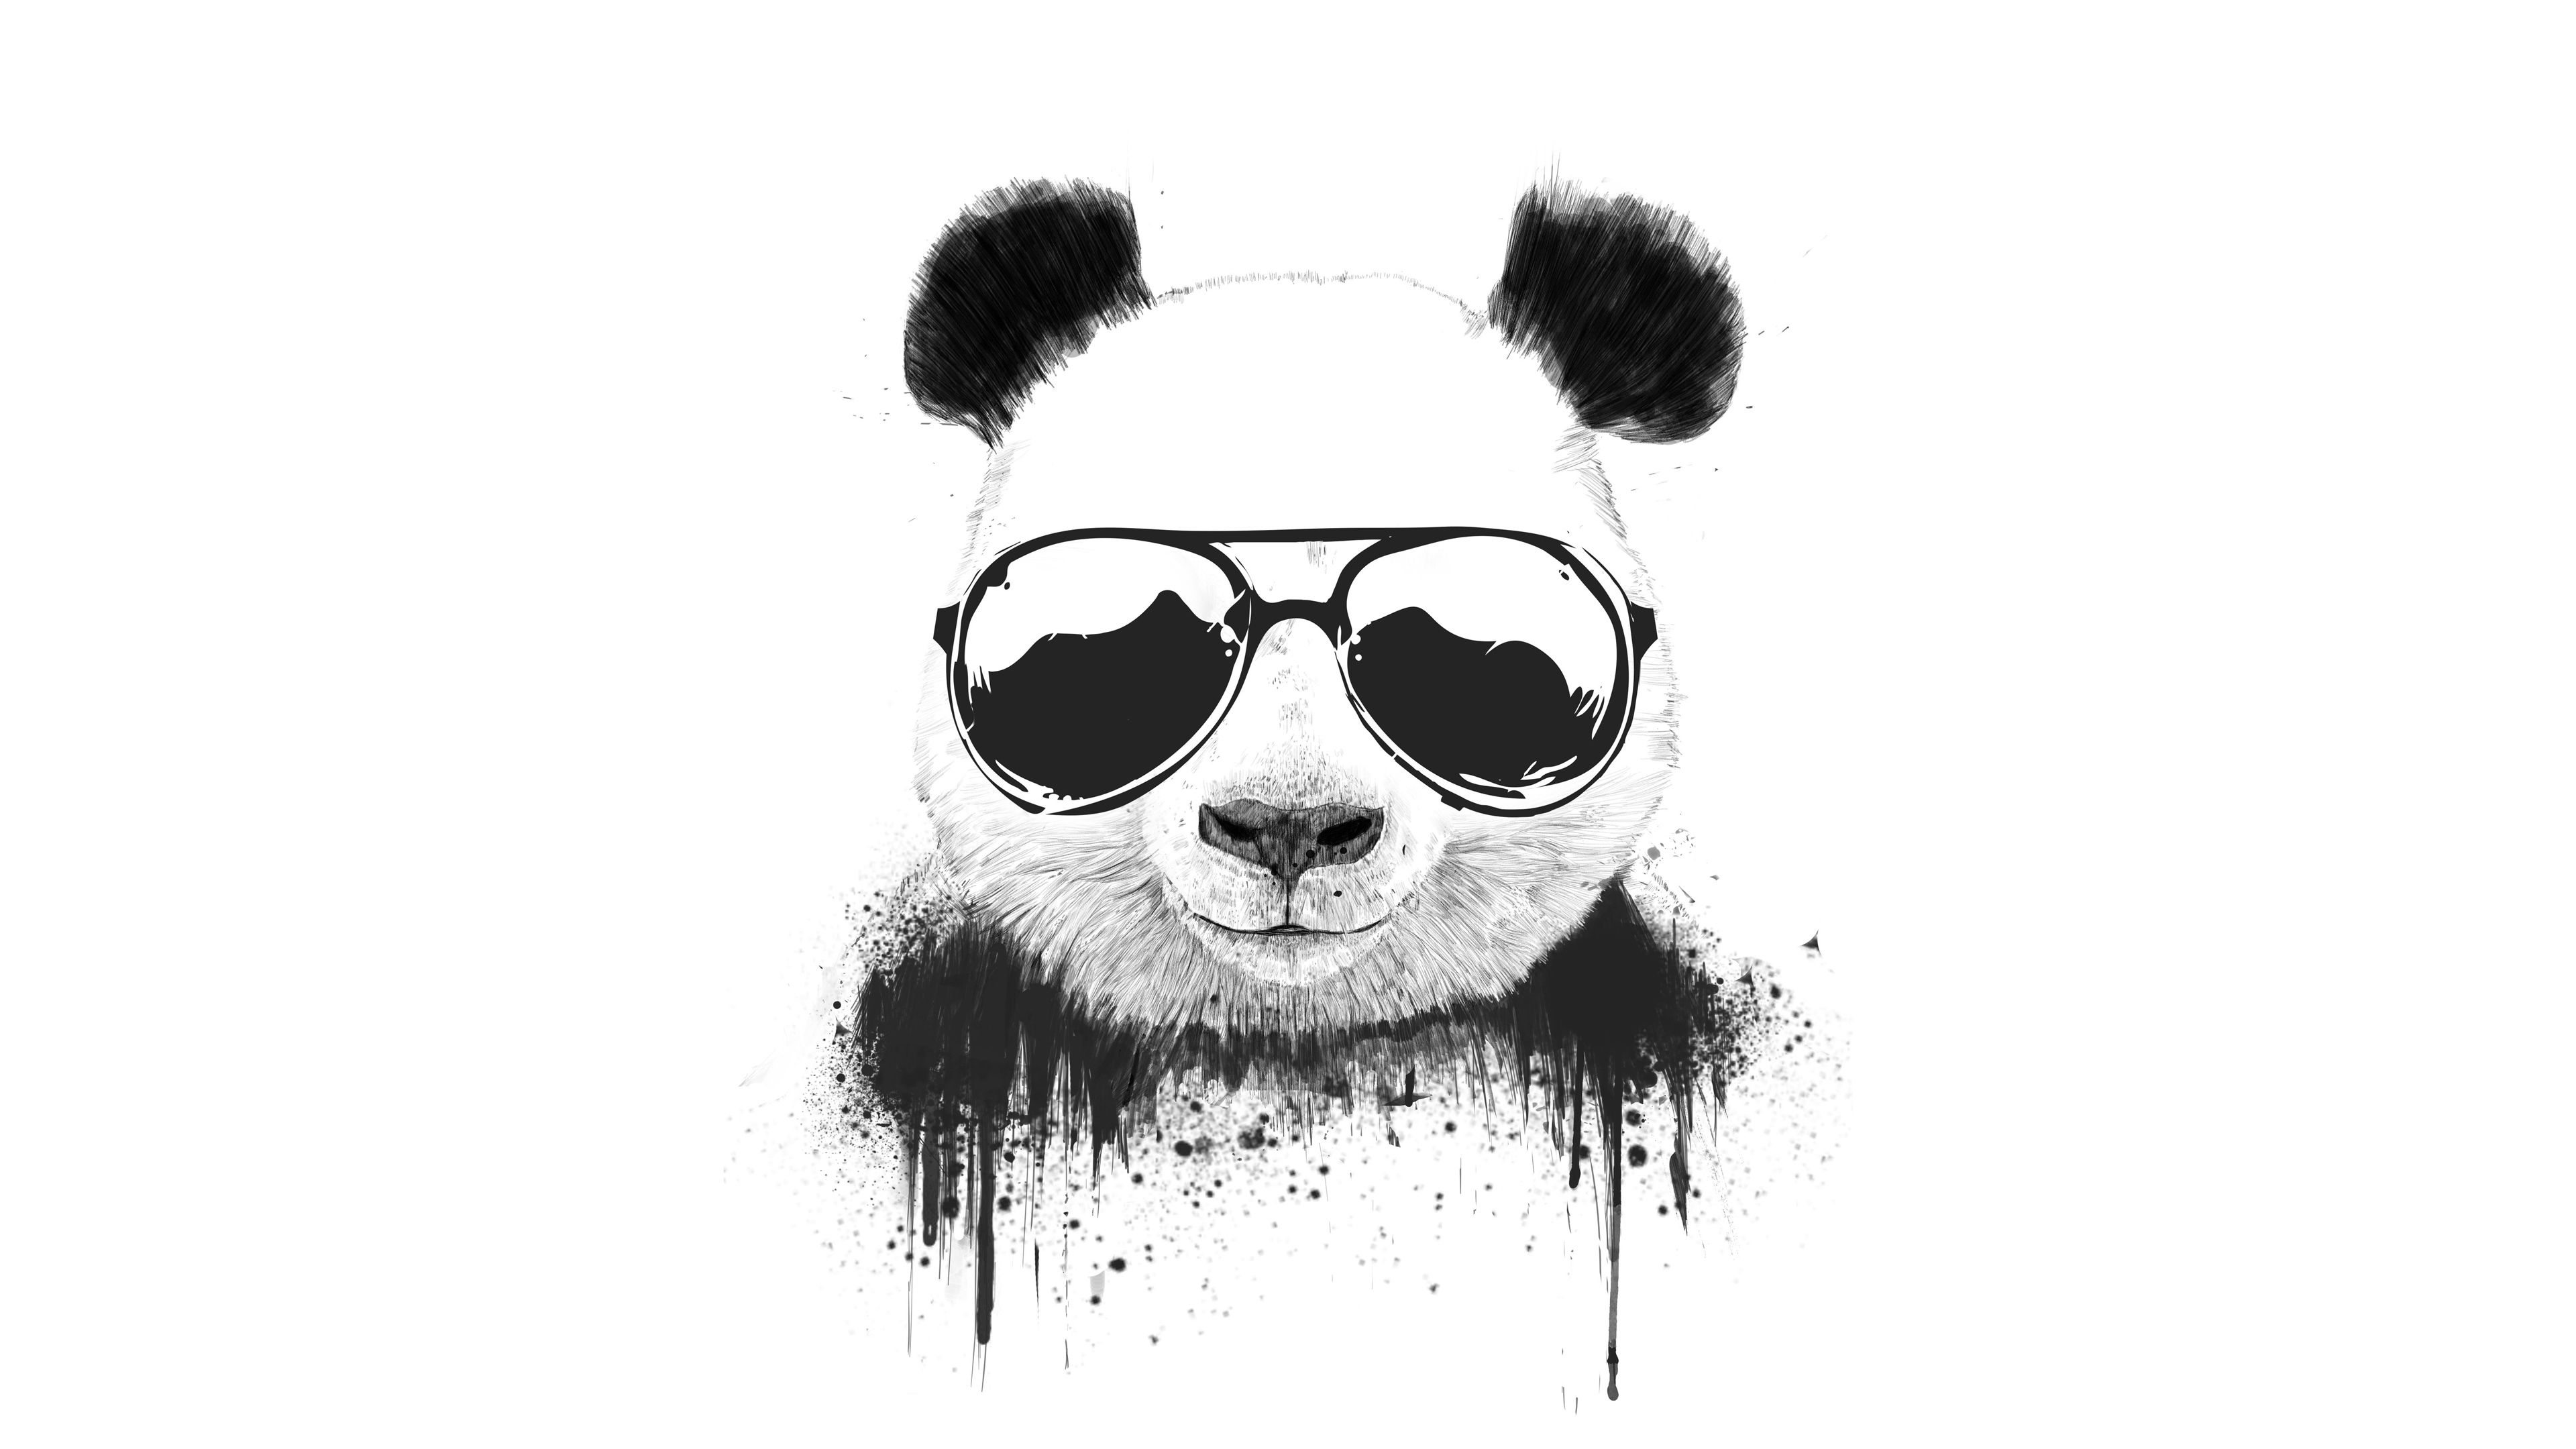 50 4K Panda Wallpapers HD For Desktop 1440p 2020  Page 2 of 2  We 7